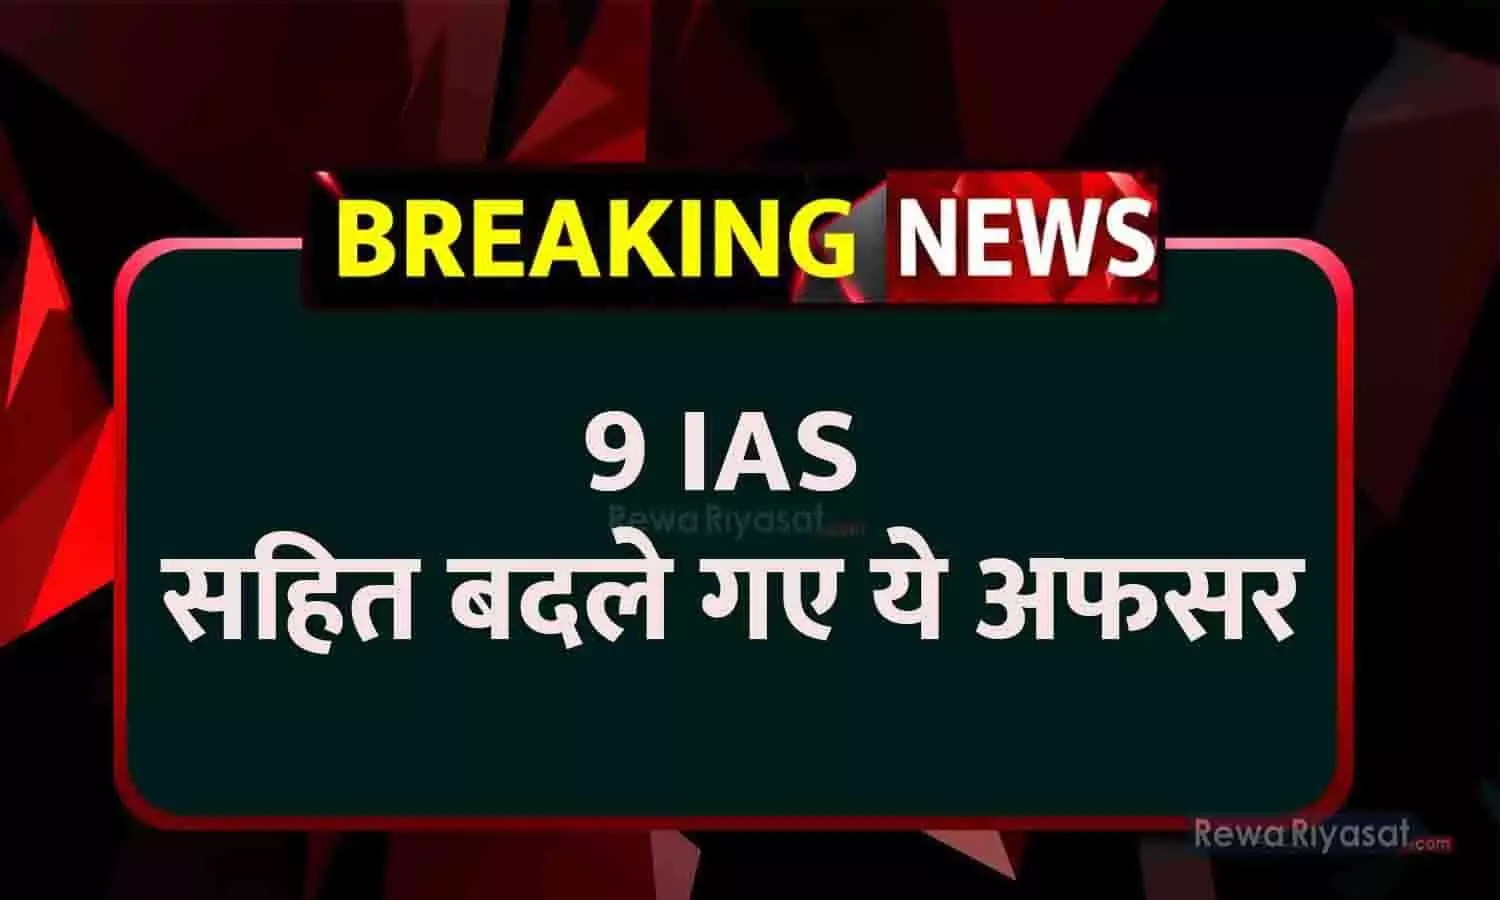 Big Breaking: 9 IAS-HCS सहित बदले गए ये अफसर